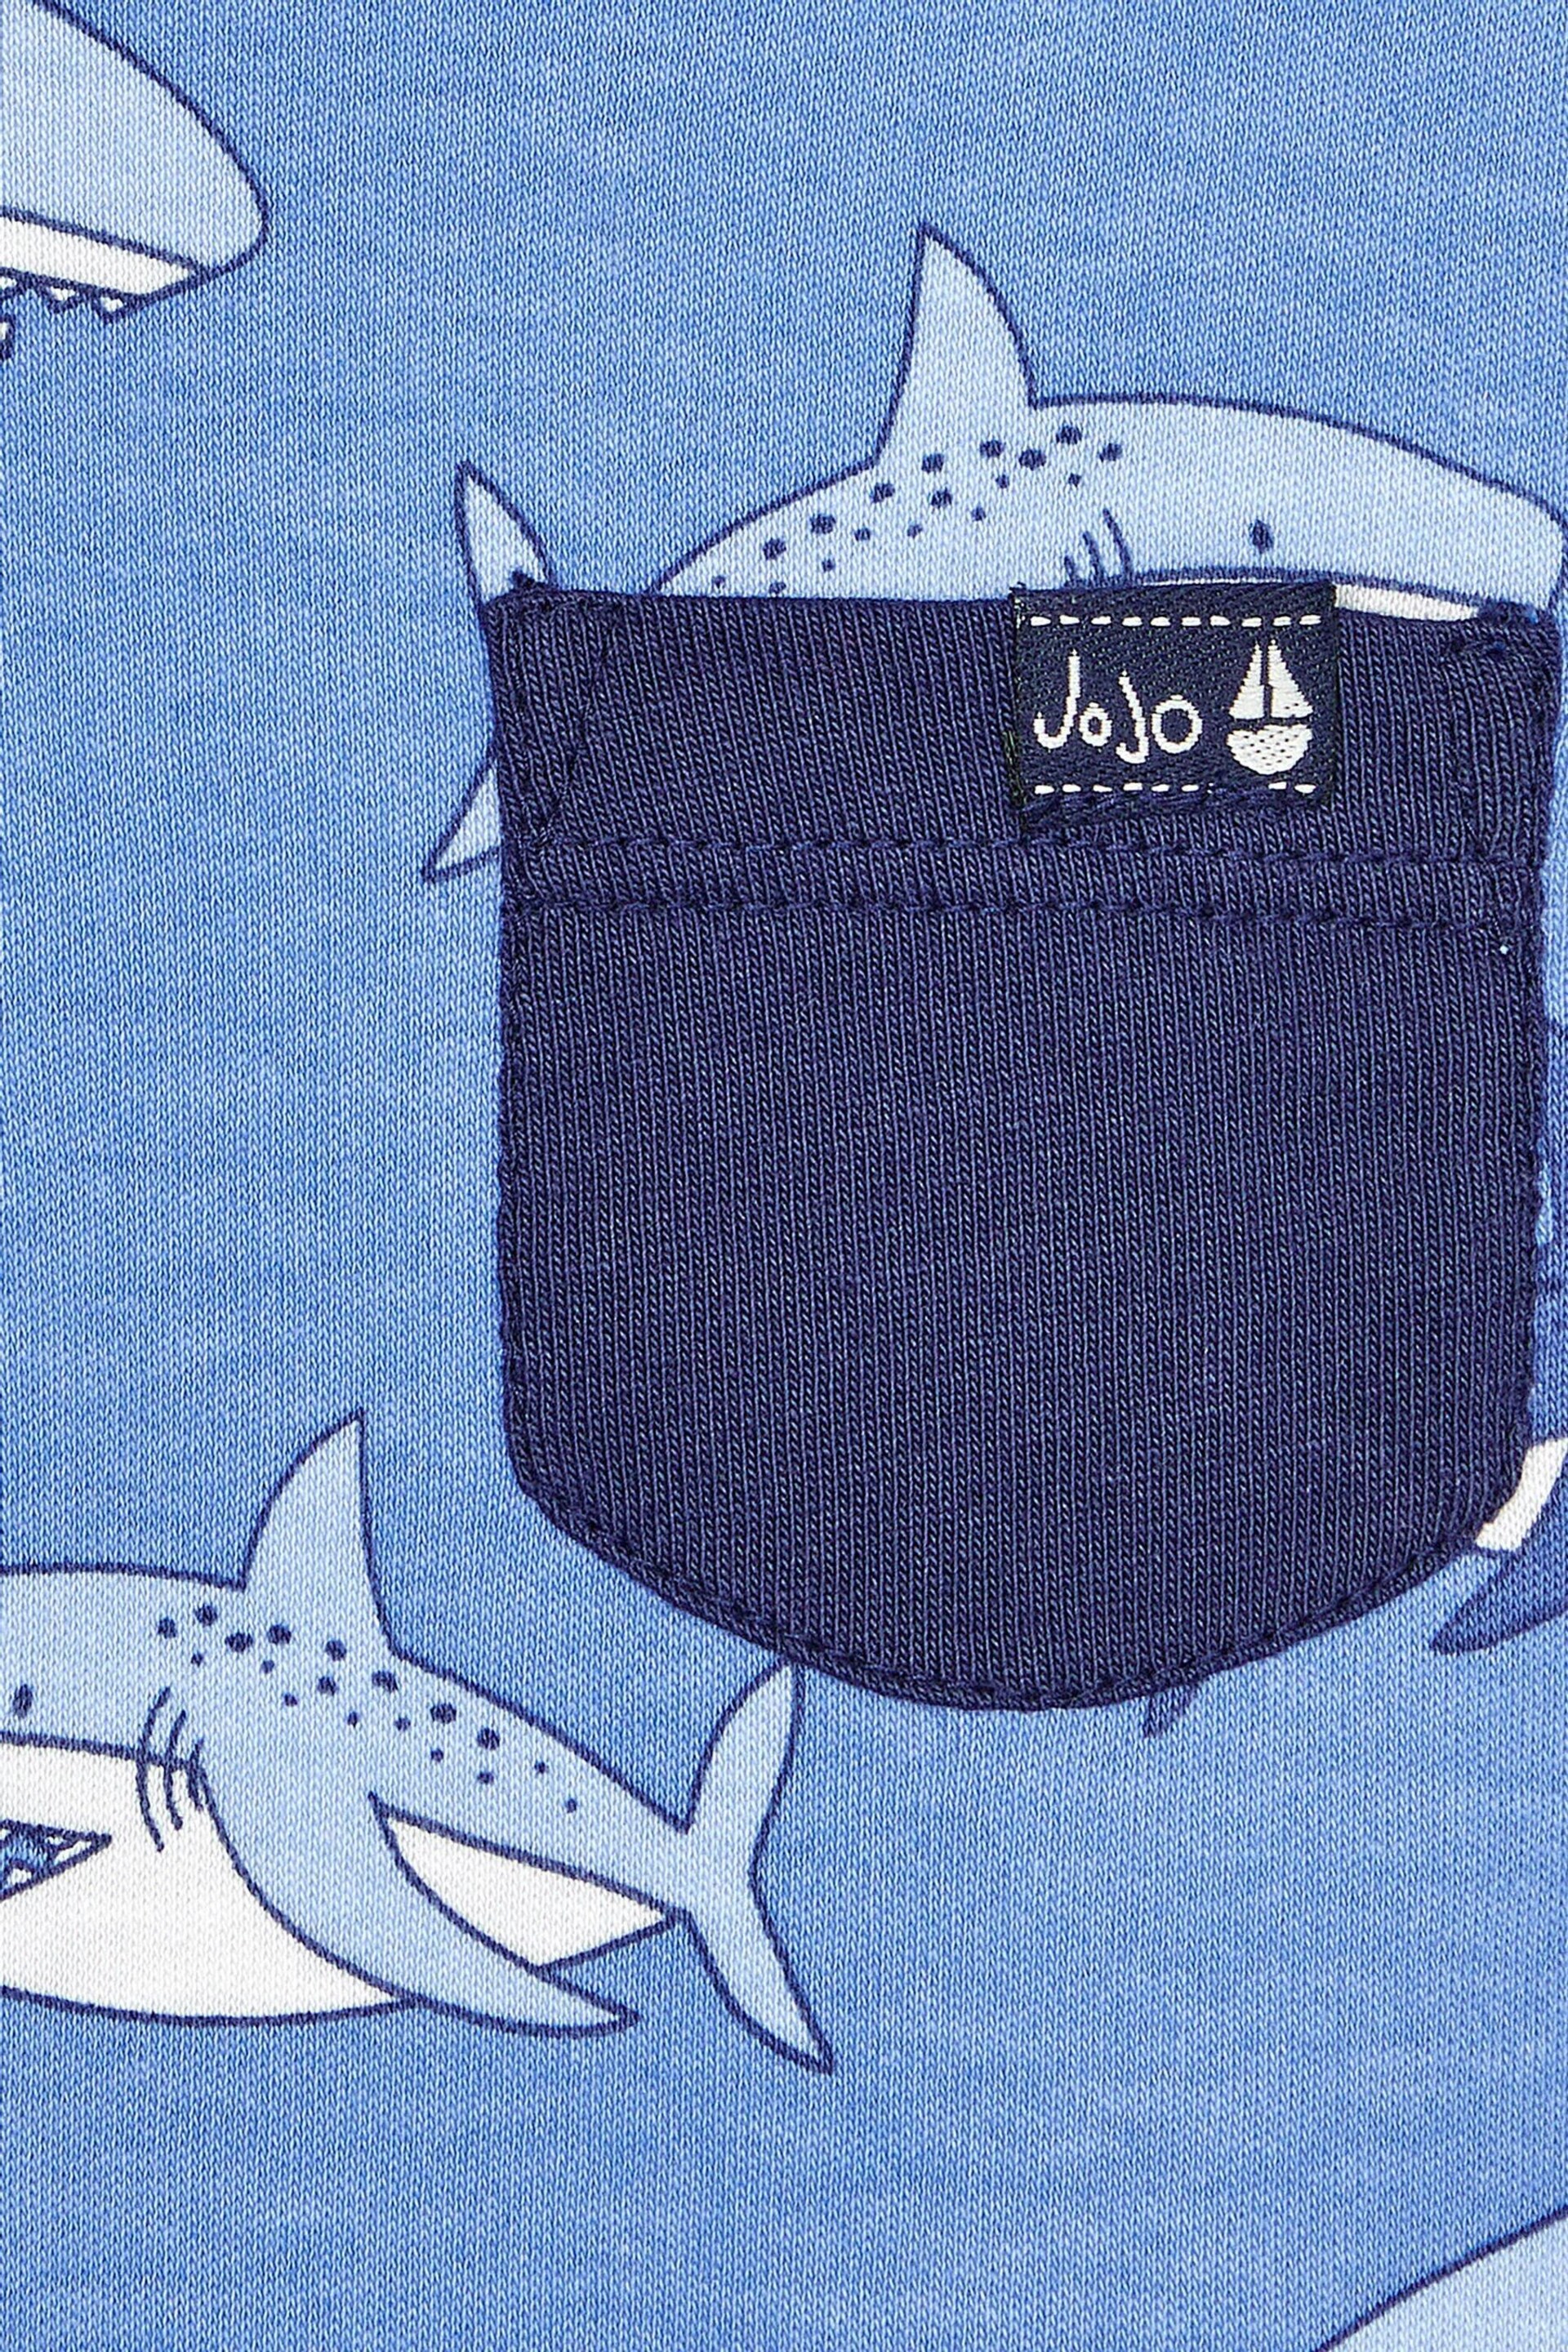 JoJo Maman Bébé Blue Shark Contrast Pocket Top - Image 3 of 3